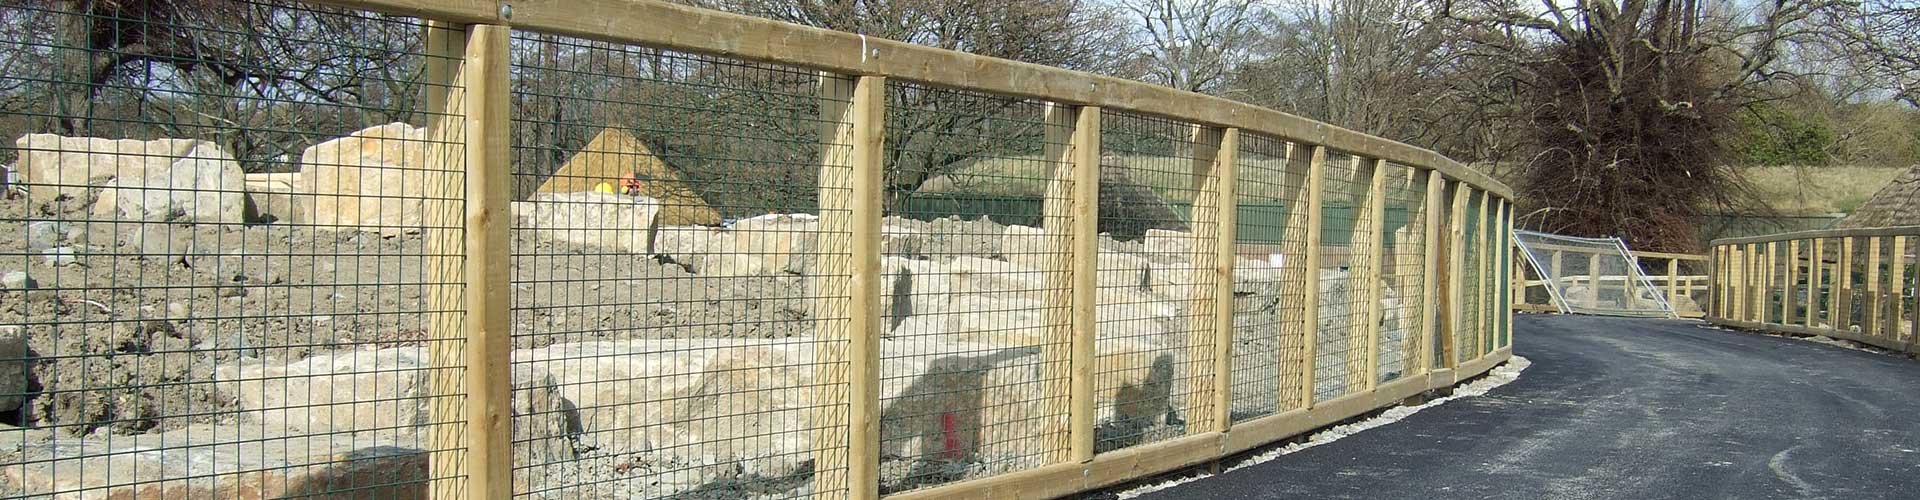 Project: Dublin Zoo